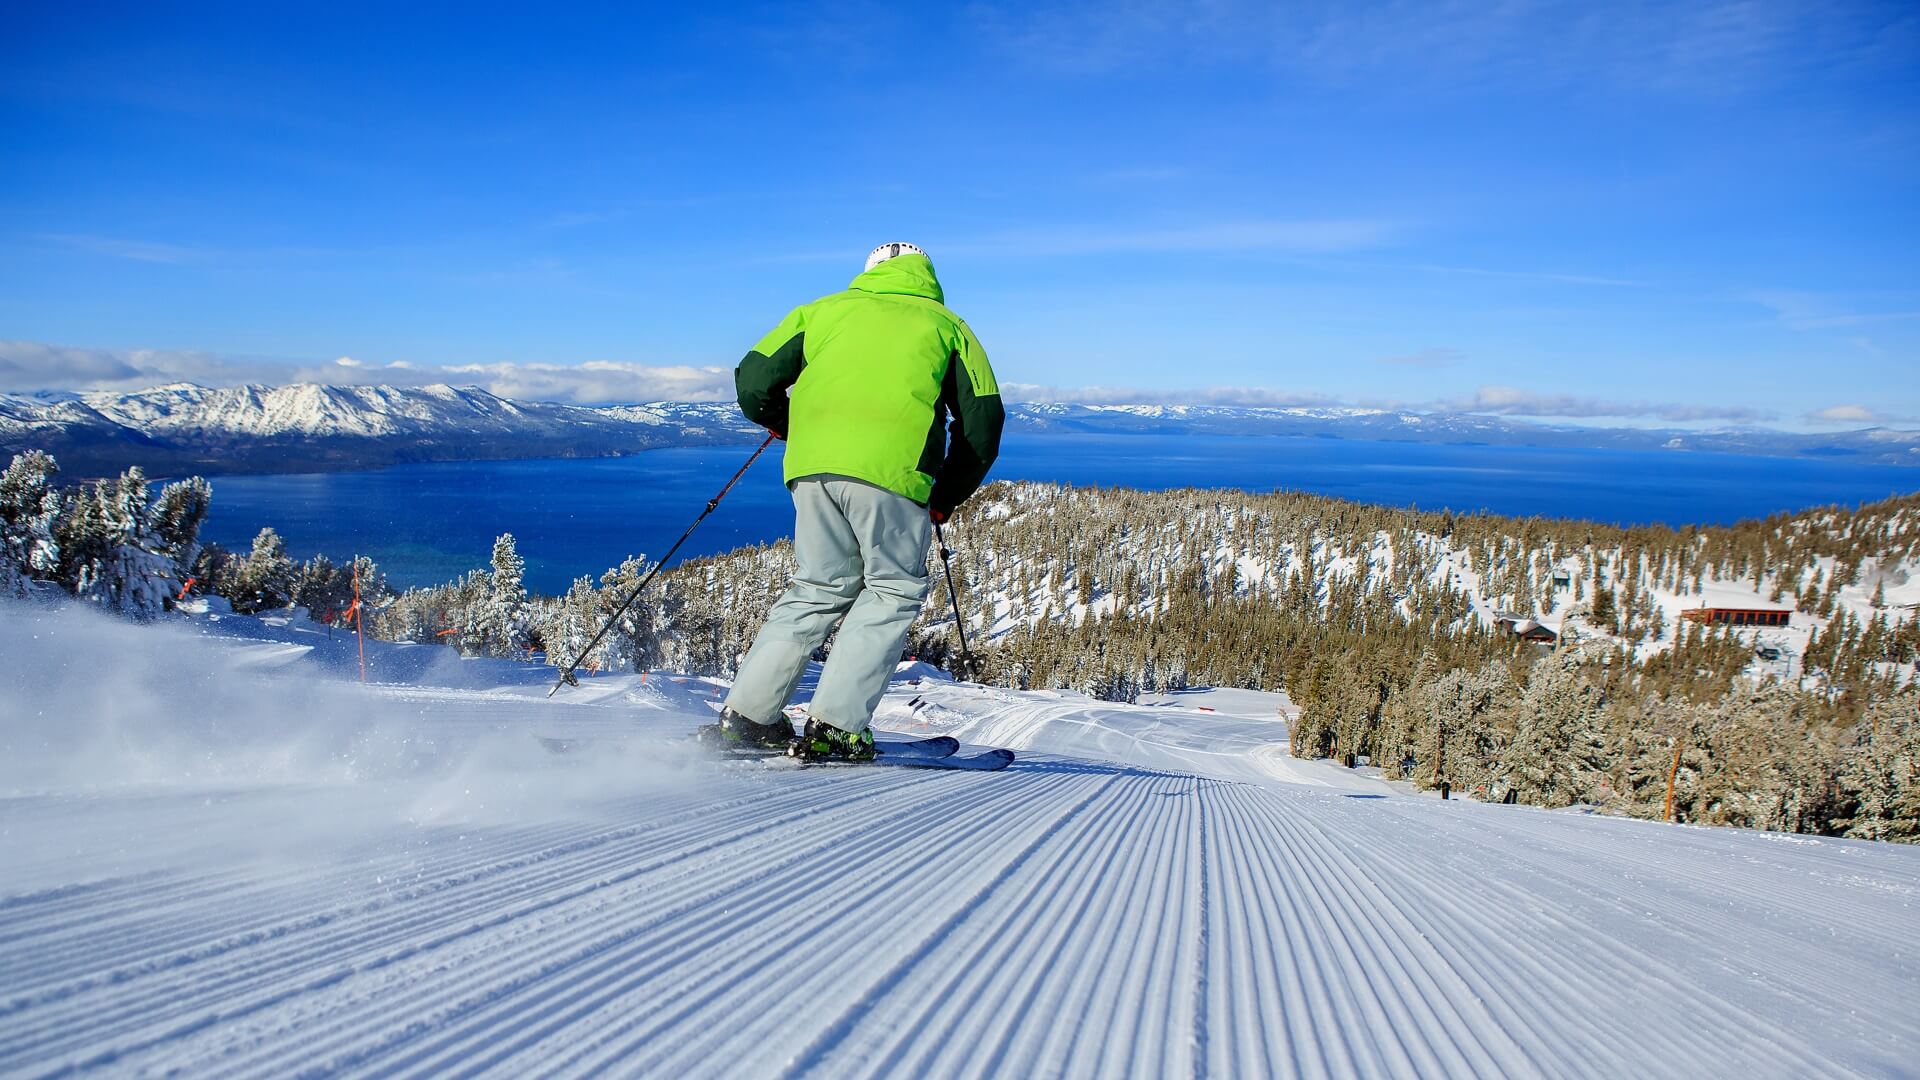 Skiing at Heavenly